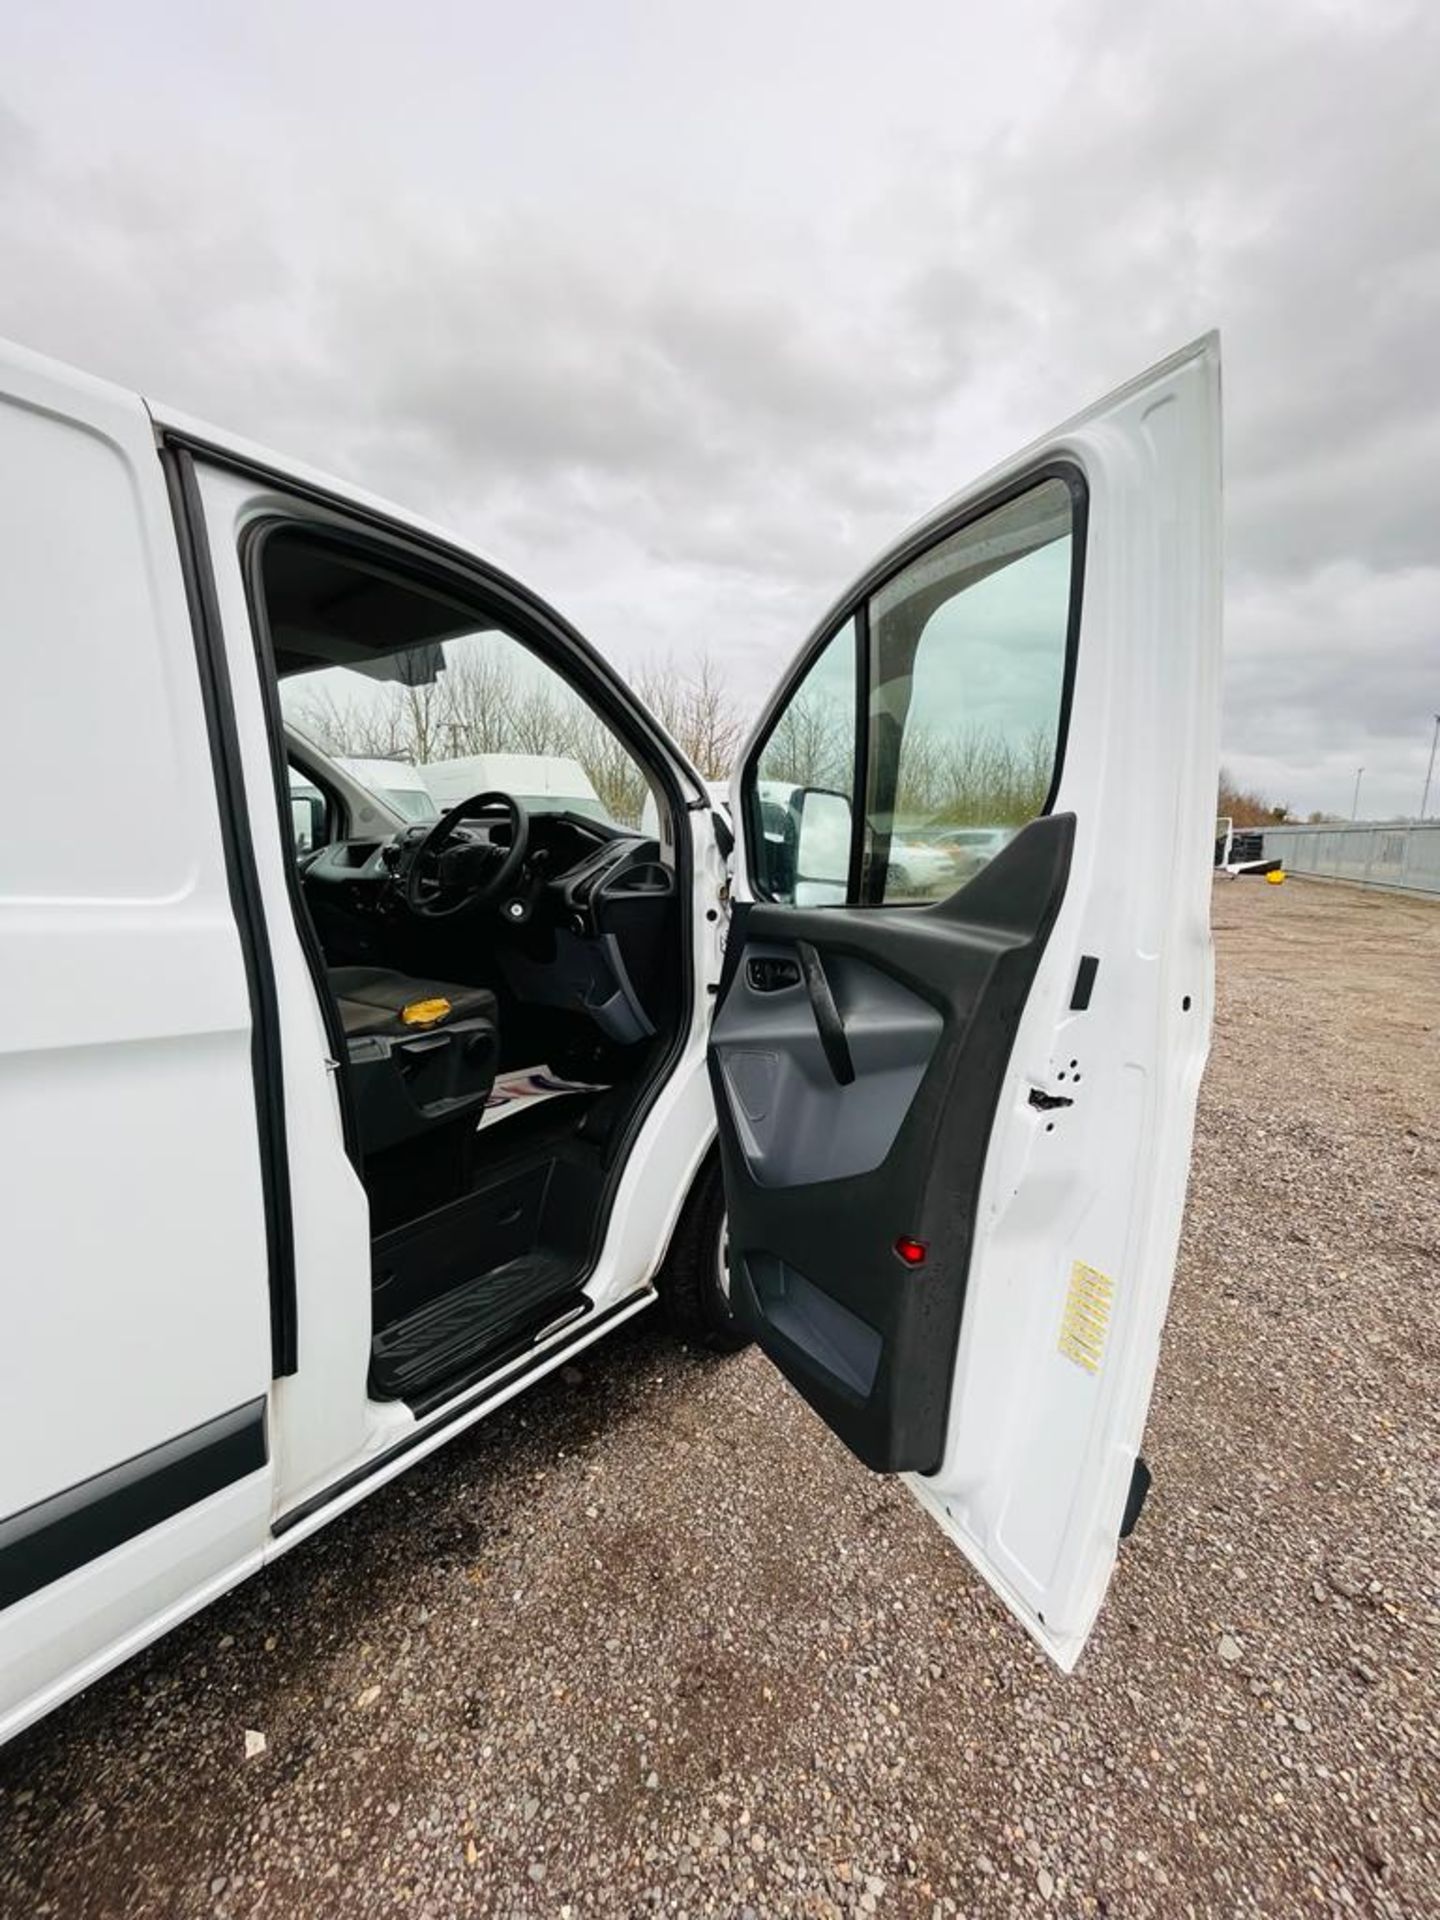 ** ON SALE ** Ford Transit Custom 2.2 TDCI EcoTech L1 H1 2014 '14 Reg' - Panel Van - Image 13 of 24